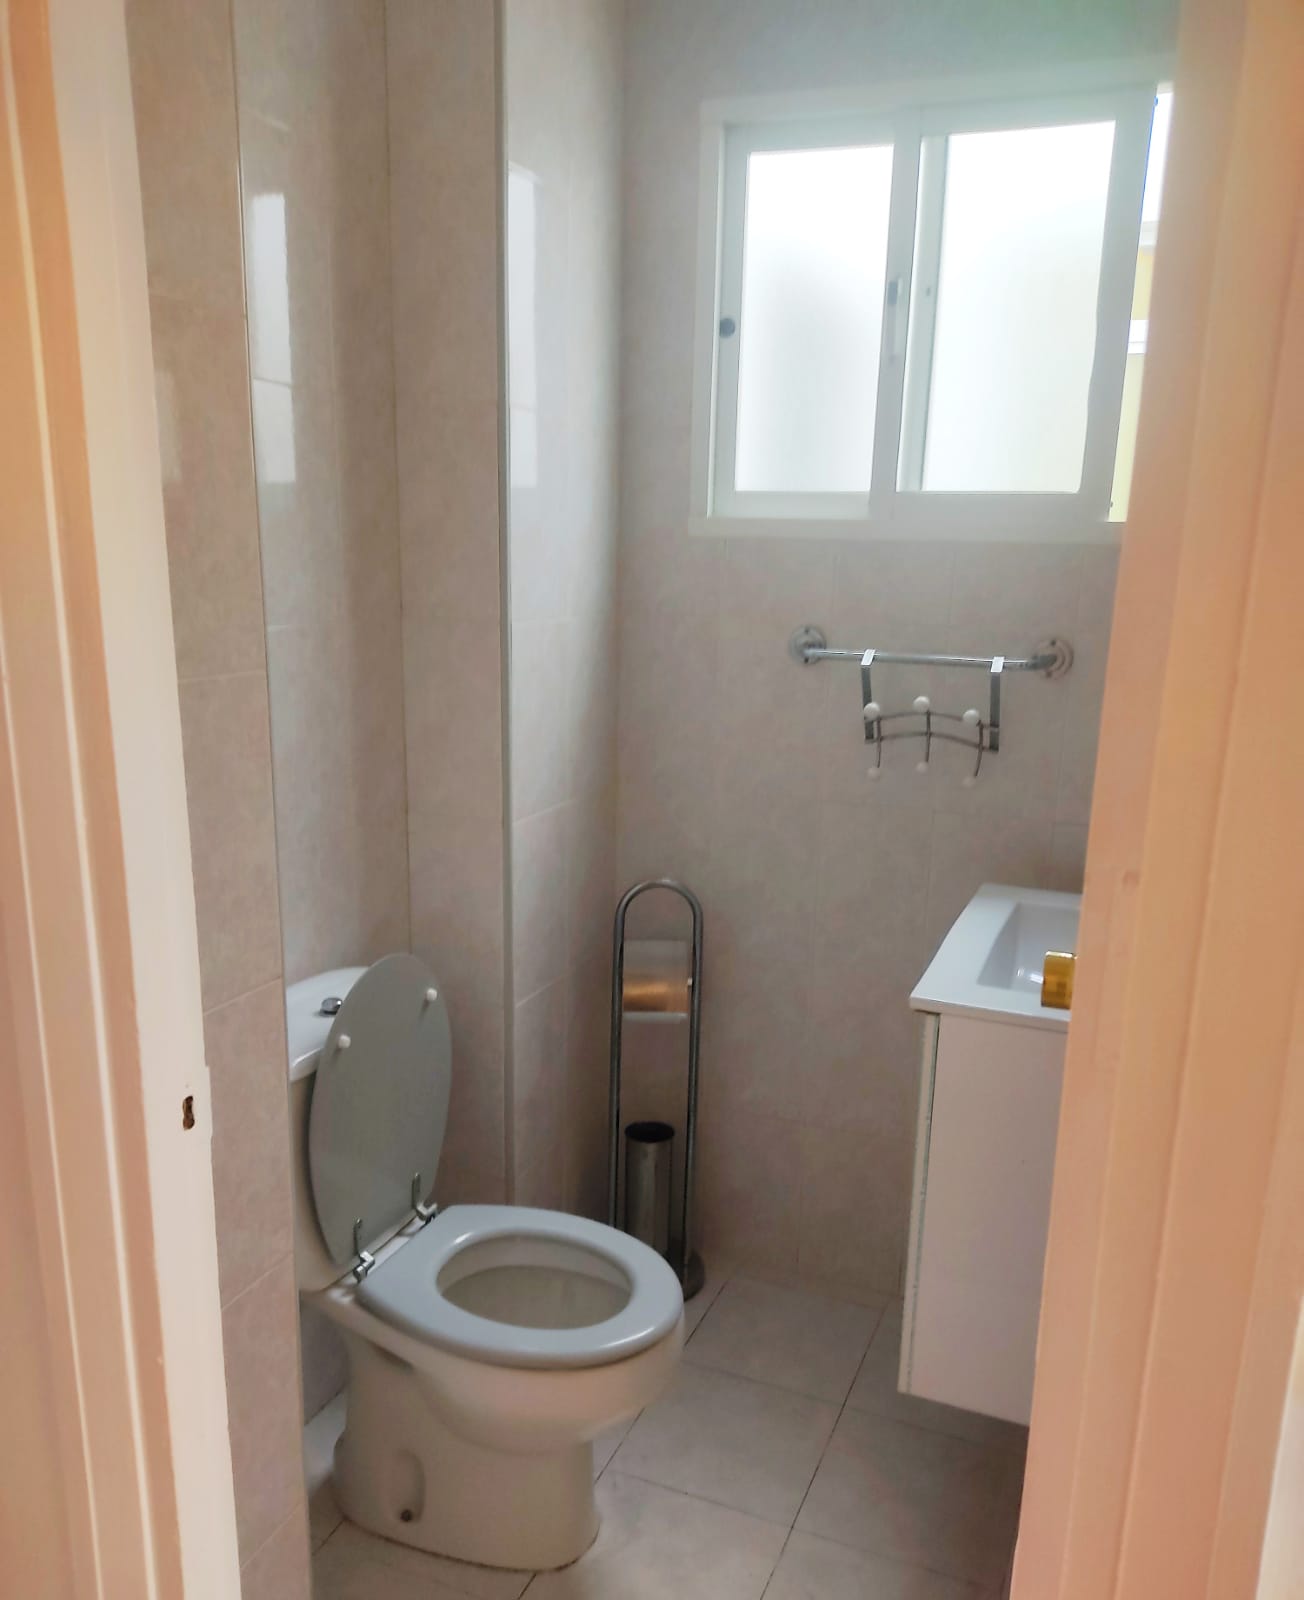 3 bedroom apartment with 2 bathrooms for rent in Estepona next to Plaza de Huevo - thumb - mibgroup.es